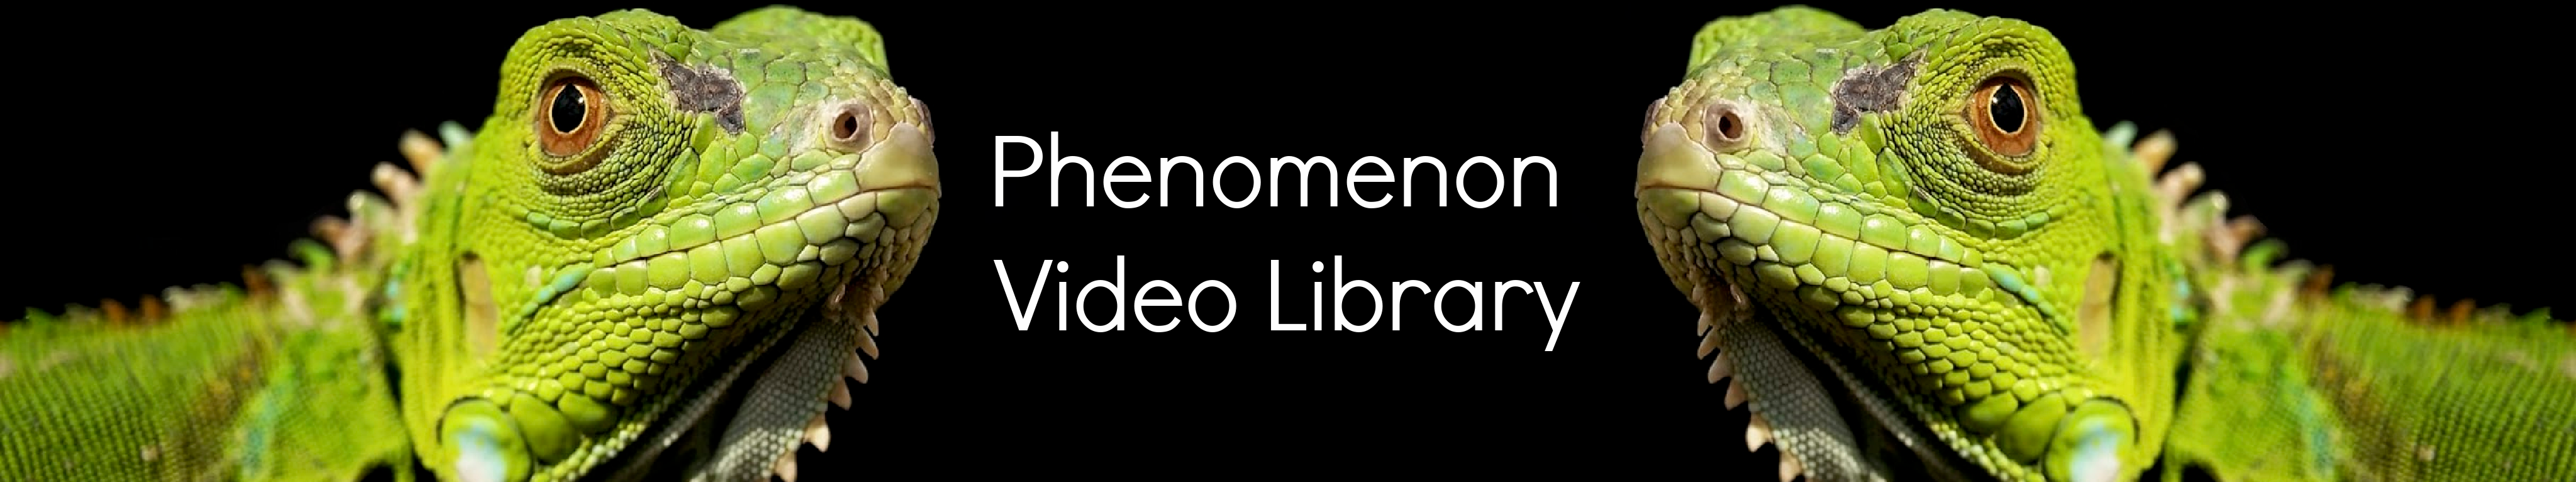 Phenomenon Video Library